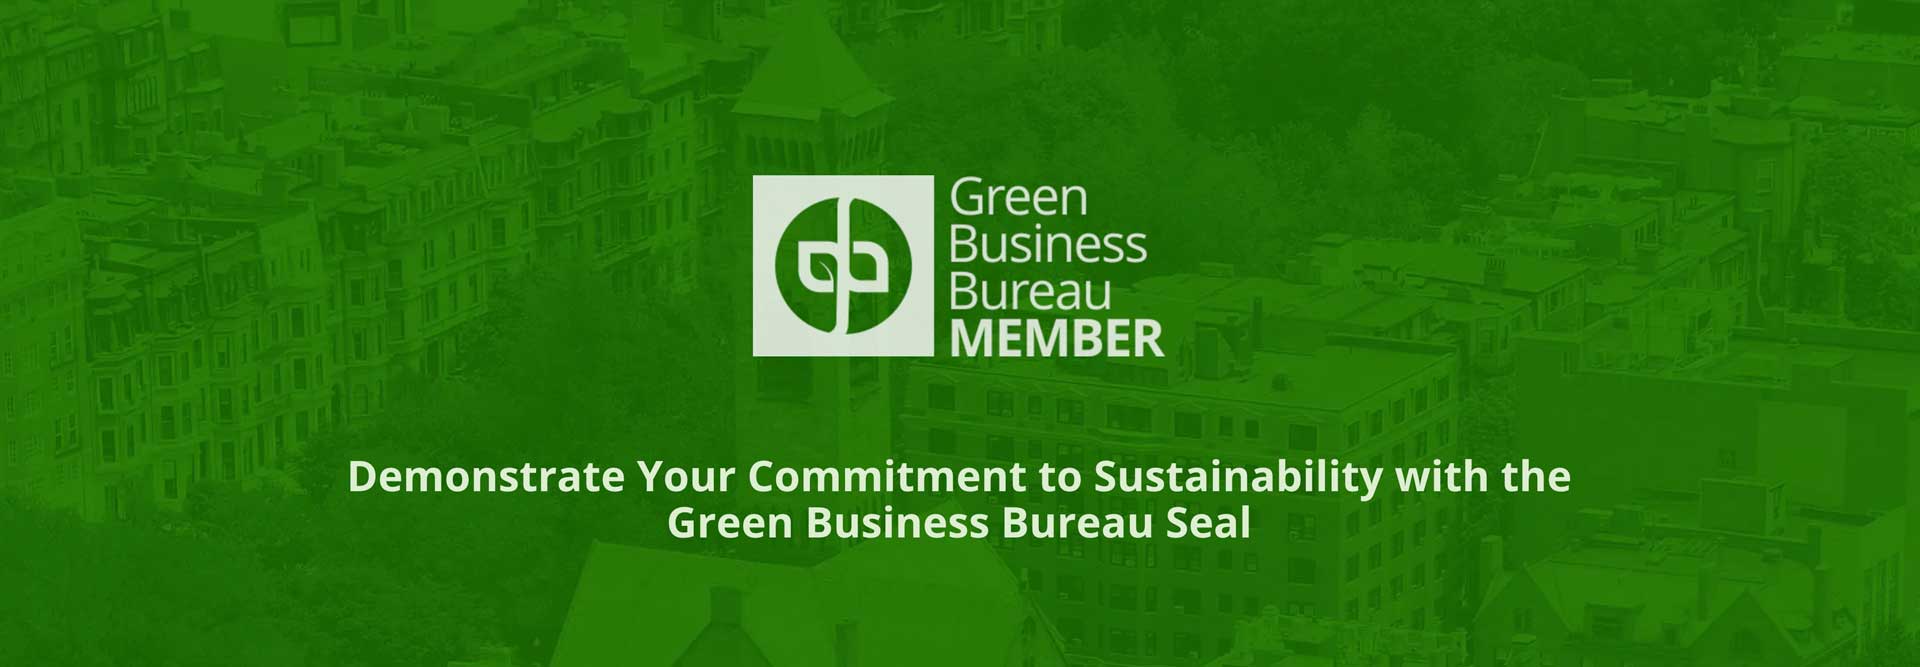 SYNLawn rejoint le Green Business Bureau